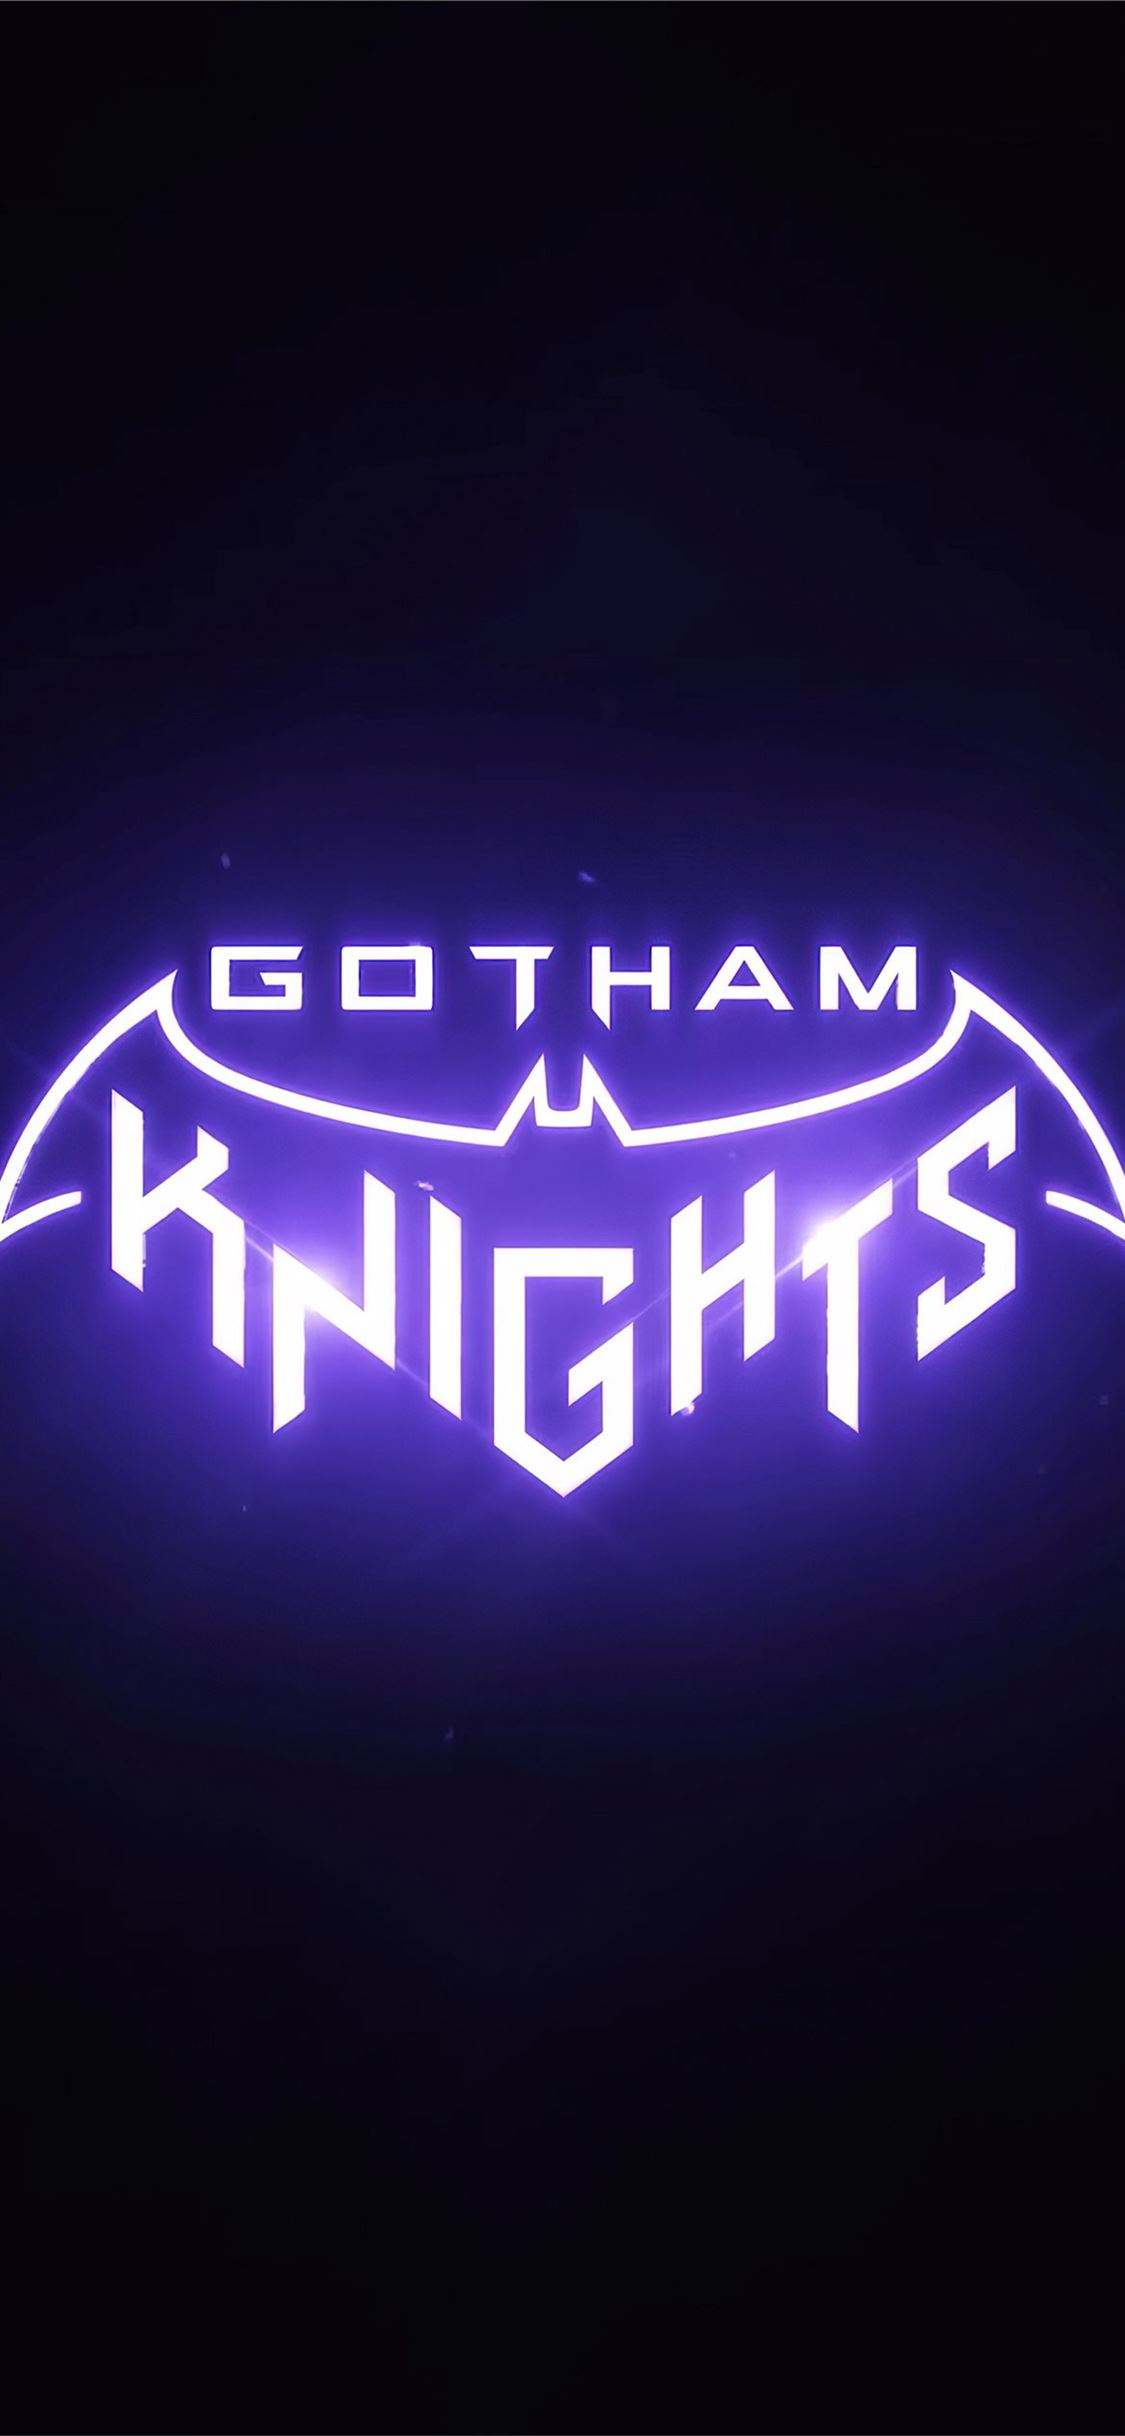 download gotham knights xbox